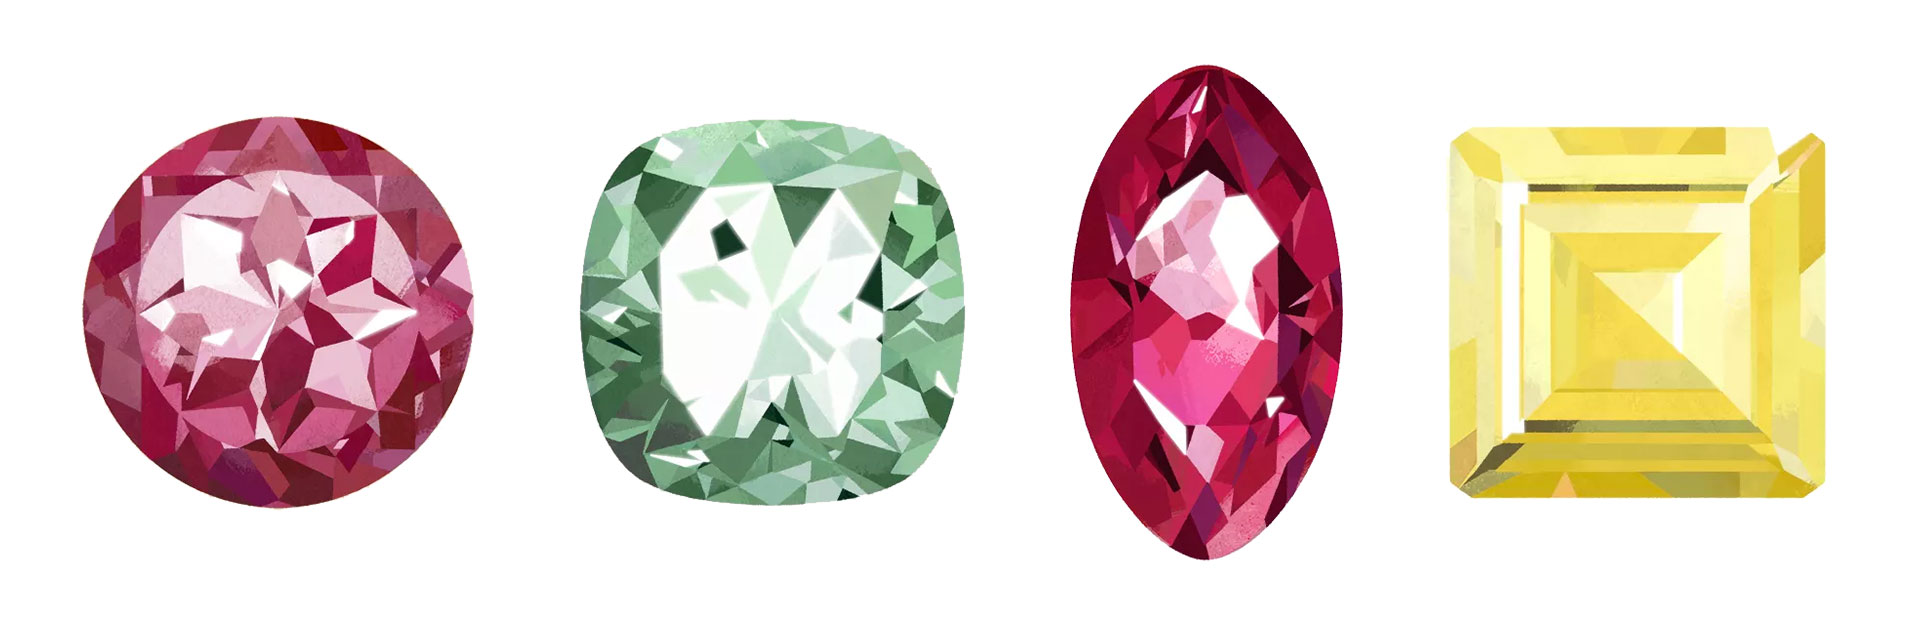 Turmalin, Prasolit, rubin og gul diamant